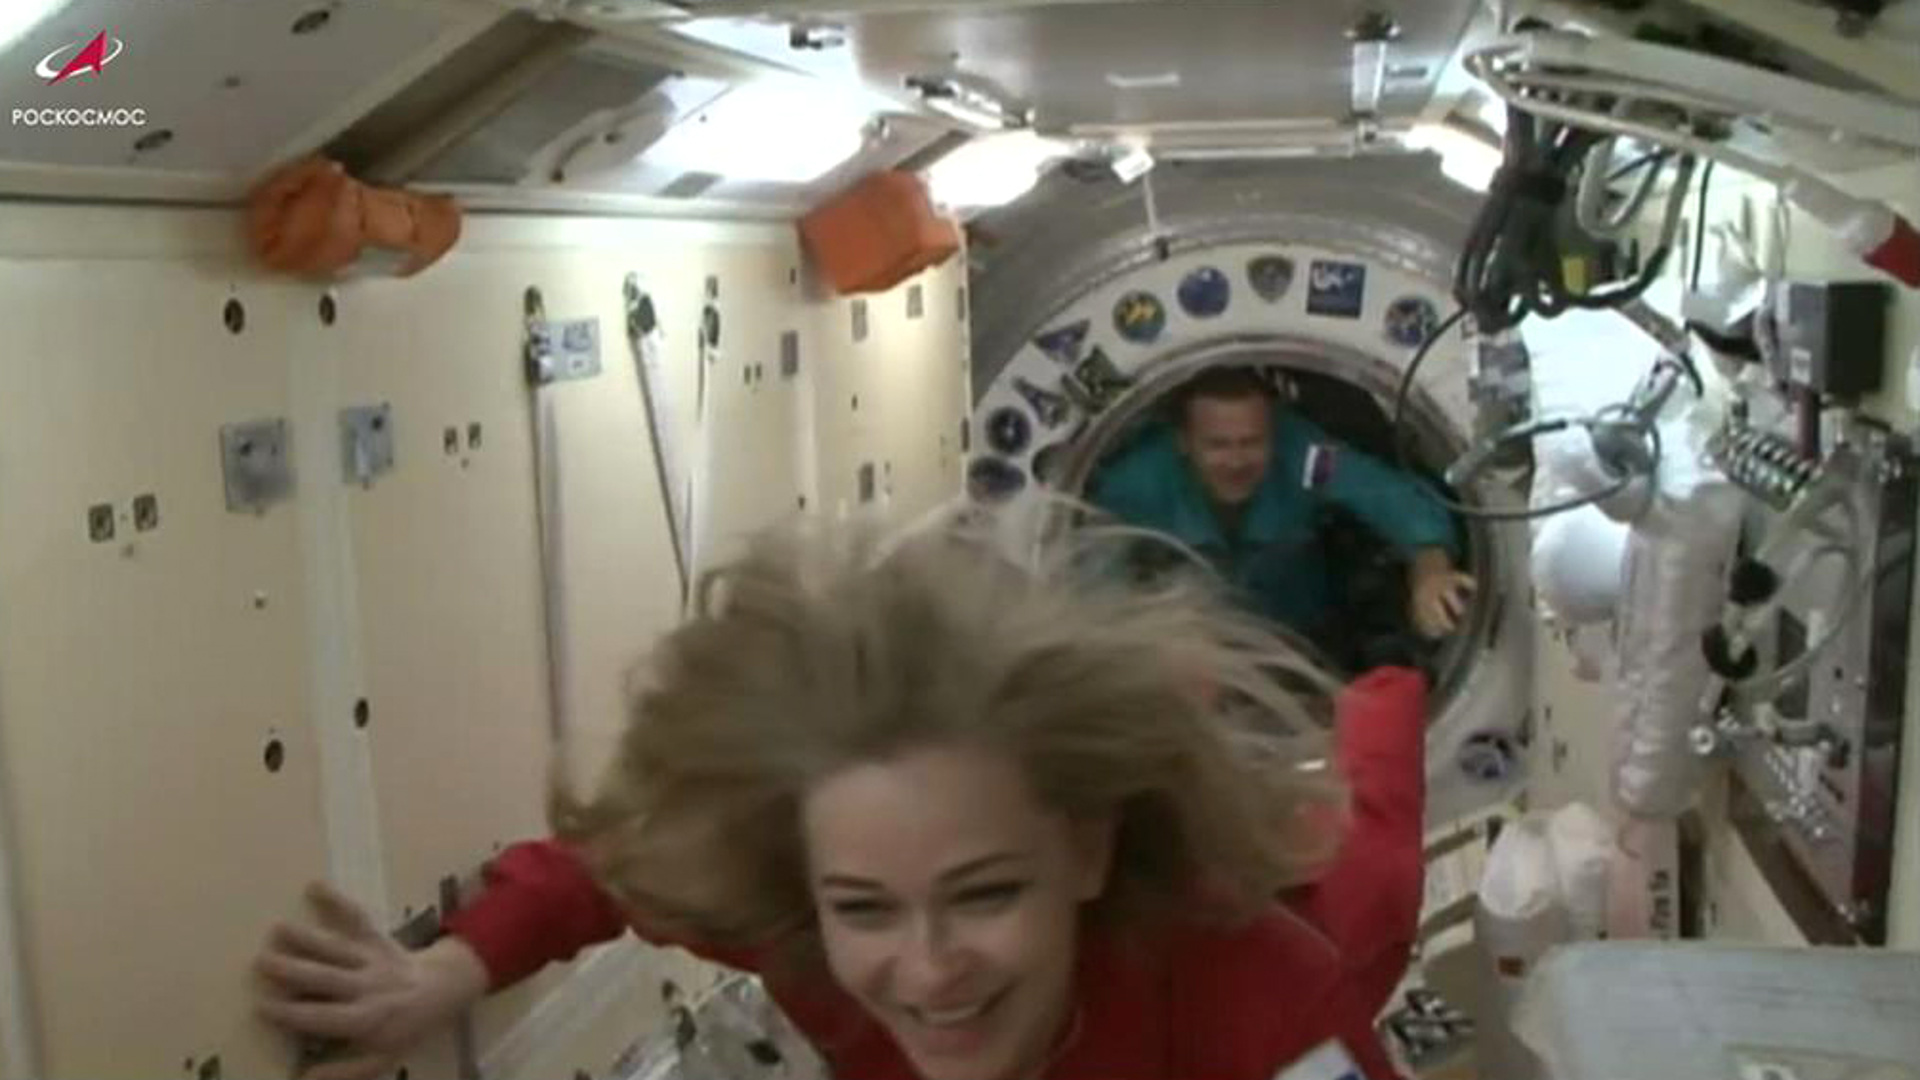 актриса полетела в космос русская фото